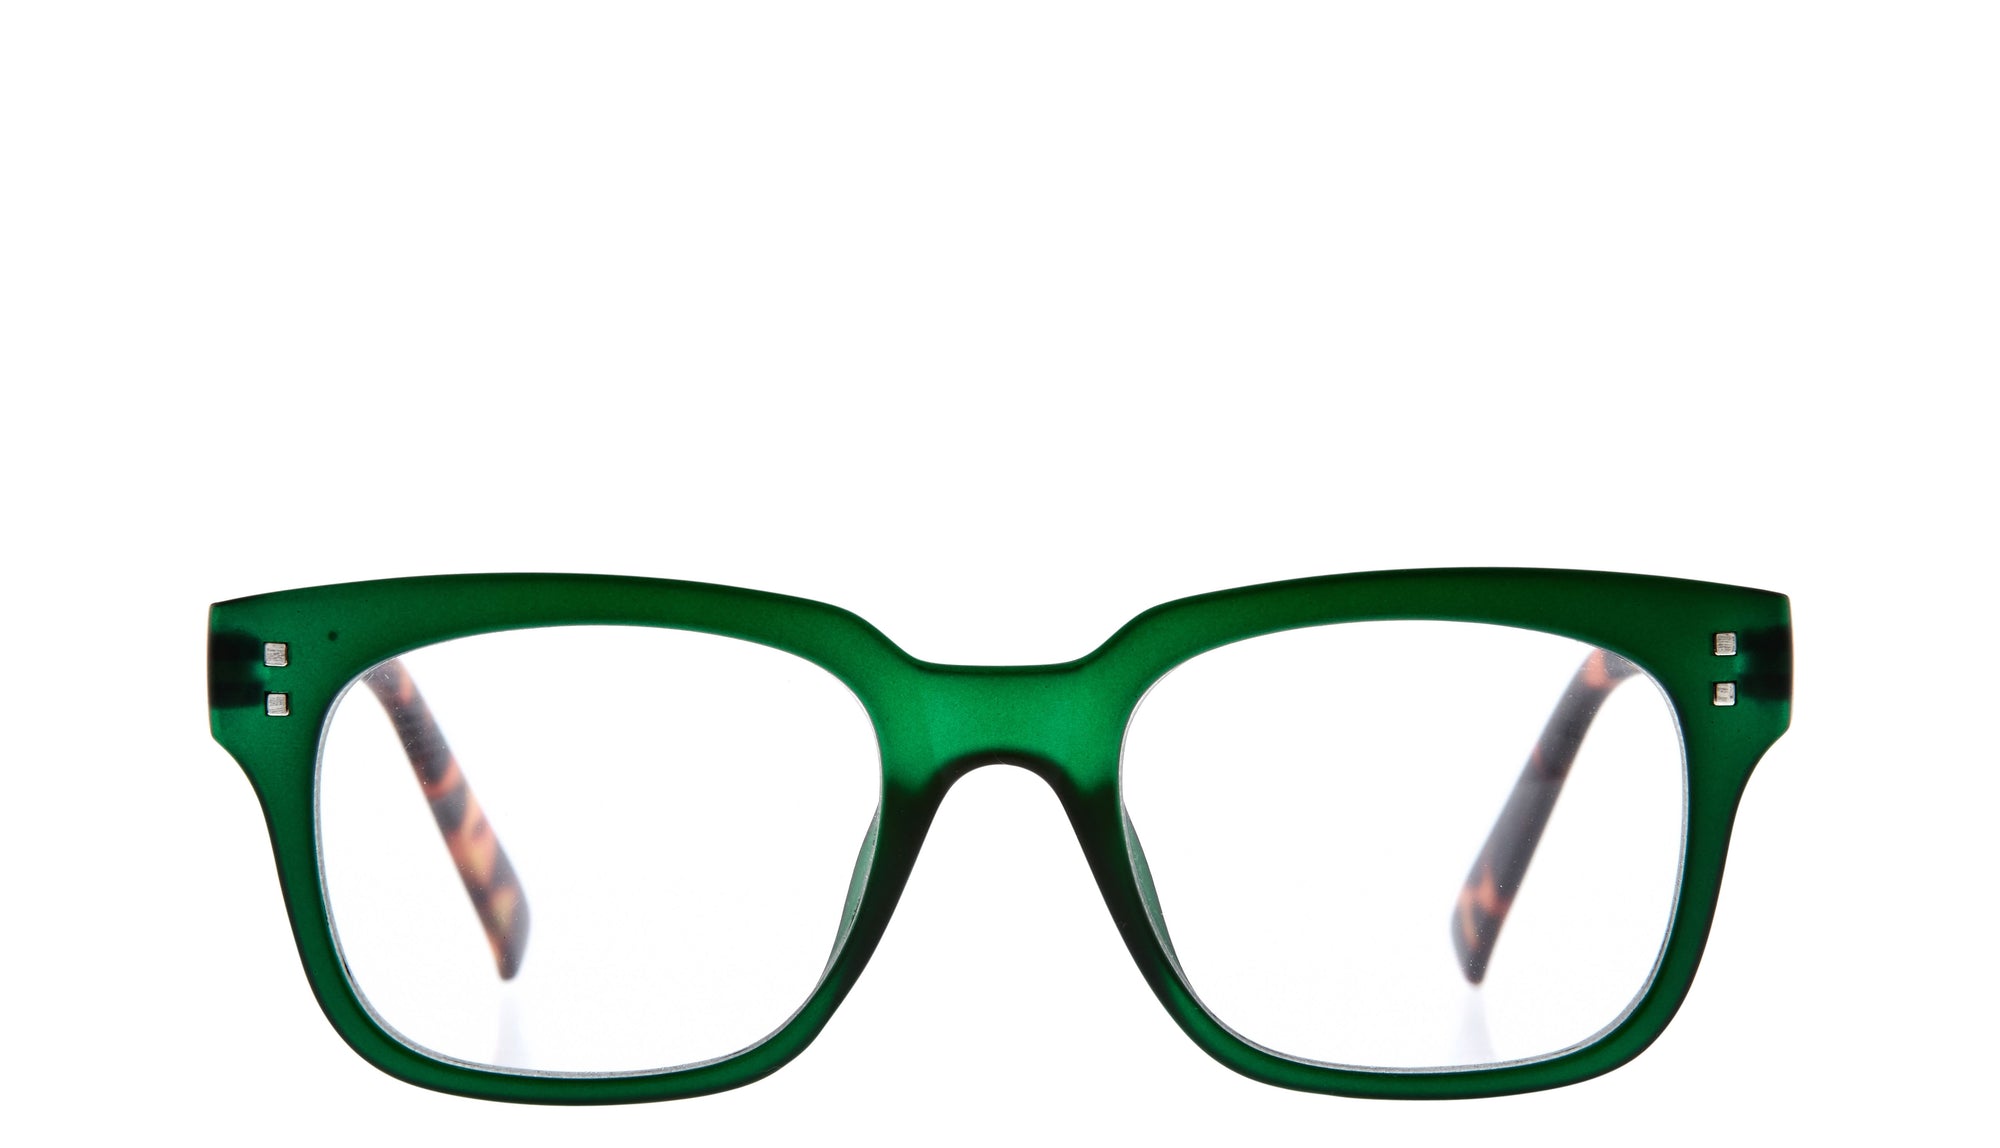 Daily Eyewear 6am Reading Glasses - Green